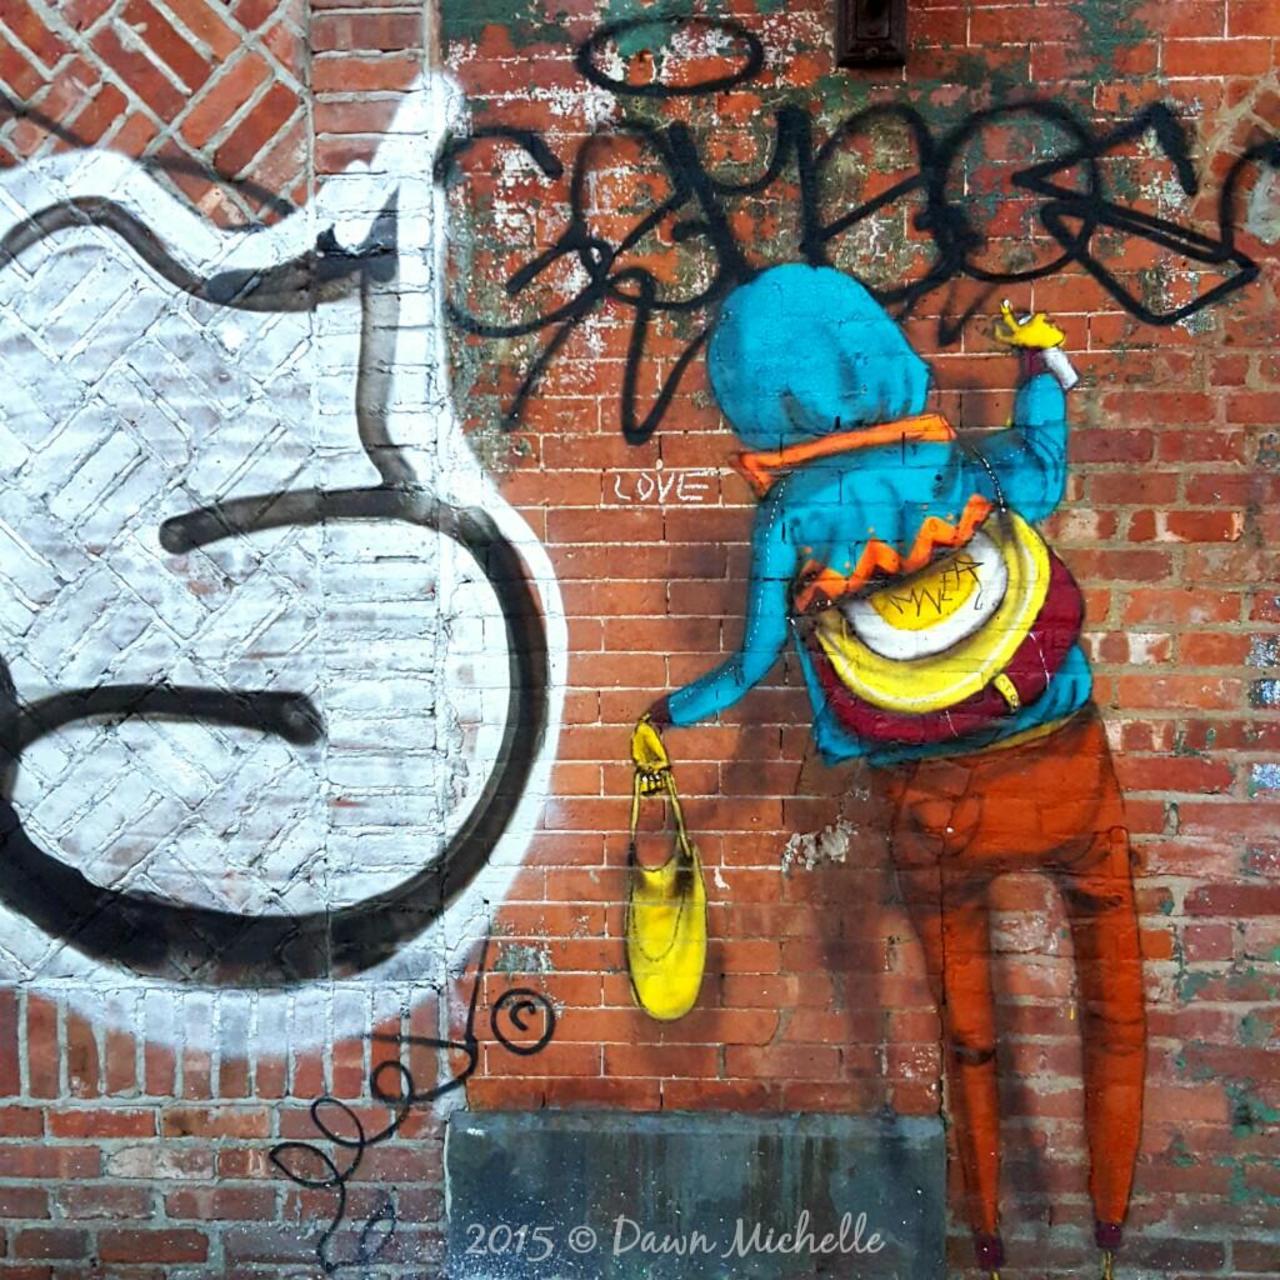 Dope @OsGemeos in #nyc #graffiti #streetart #art @circumjacent @MadeInManchestr @GraffitiFeed @NYCONLY https://t.co/kt5SMOXa8m